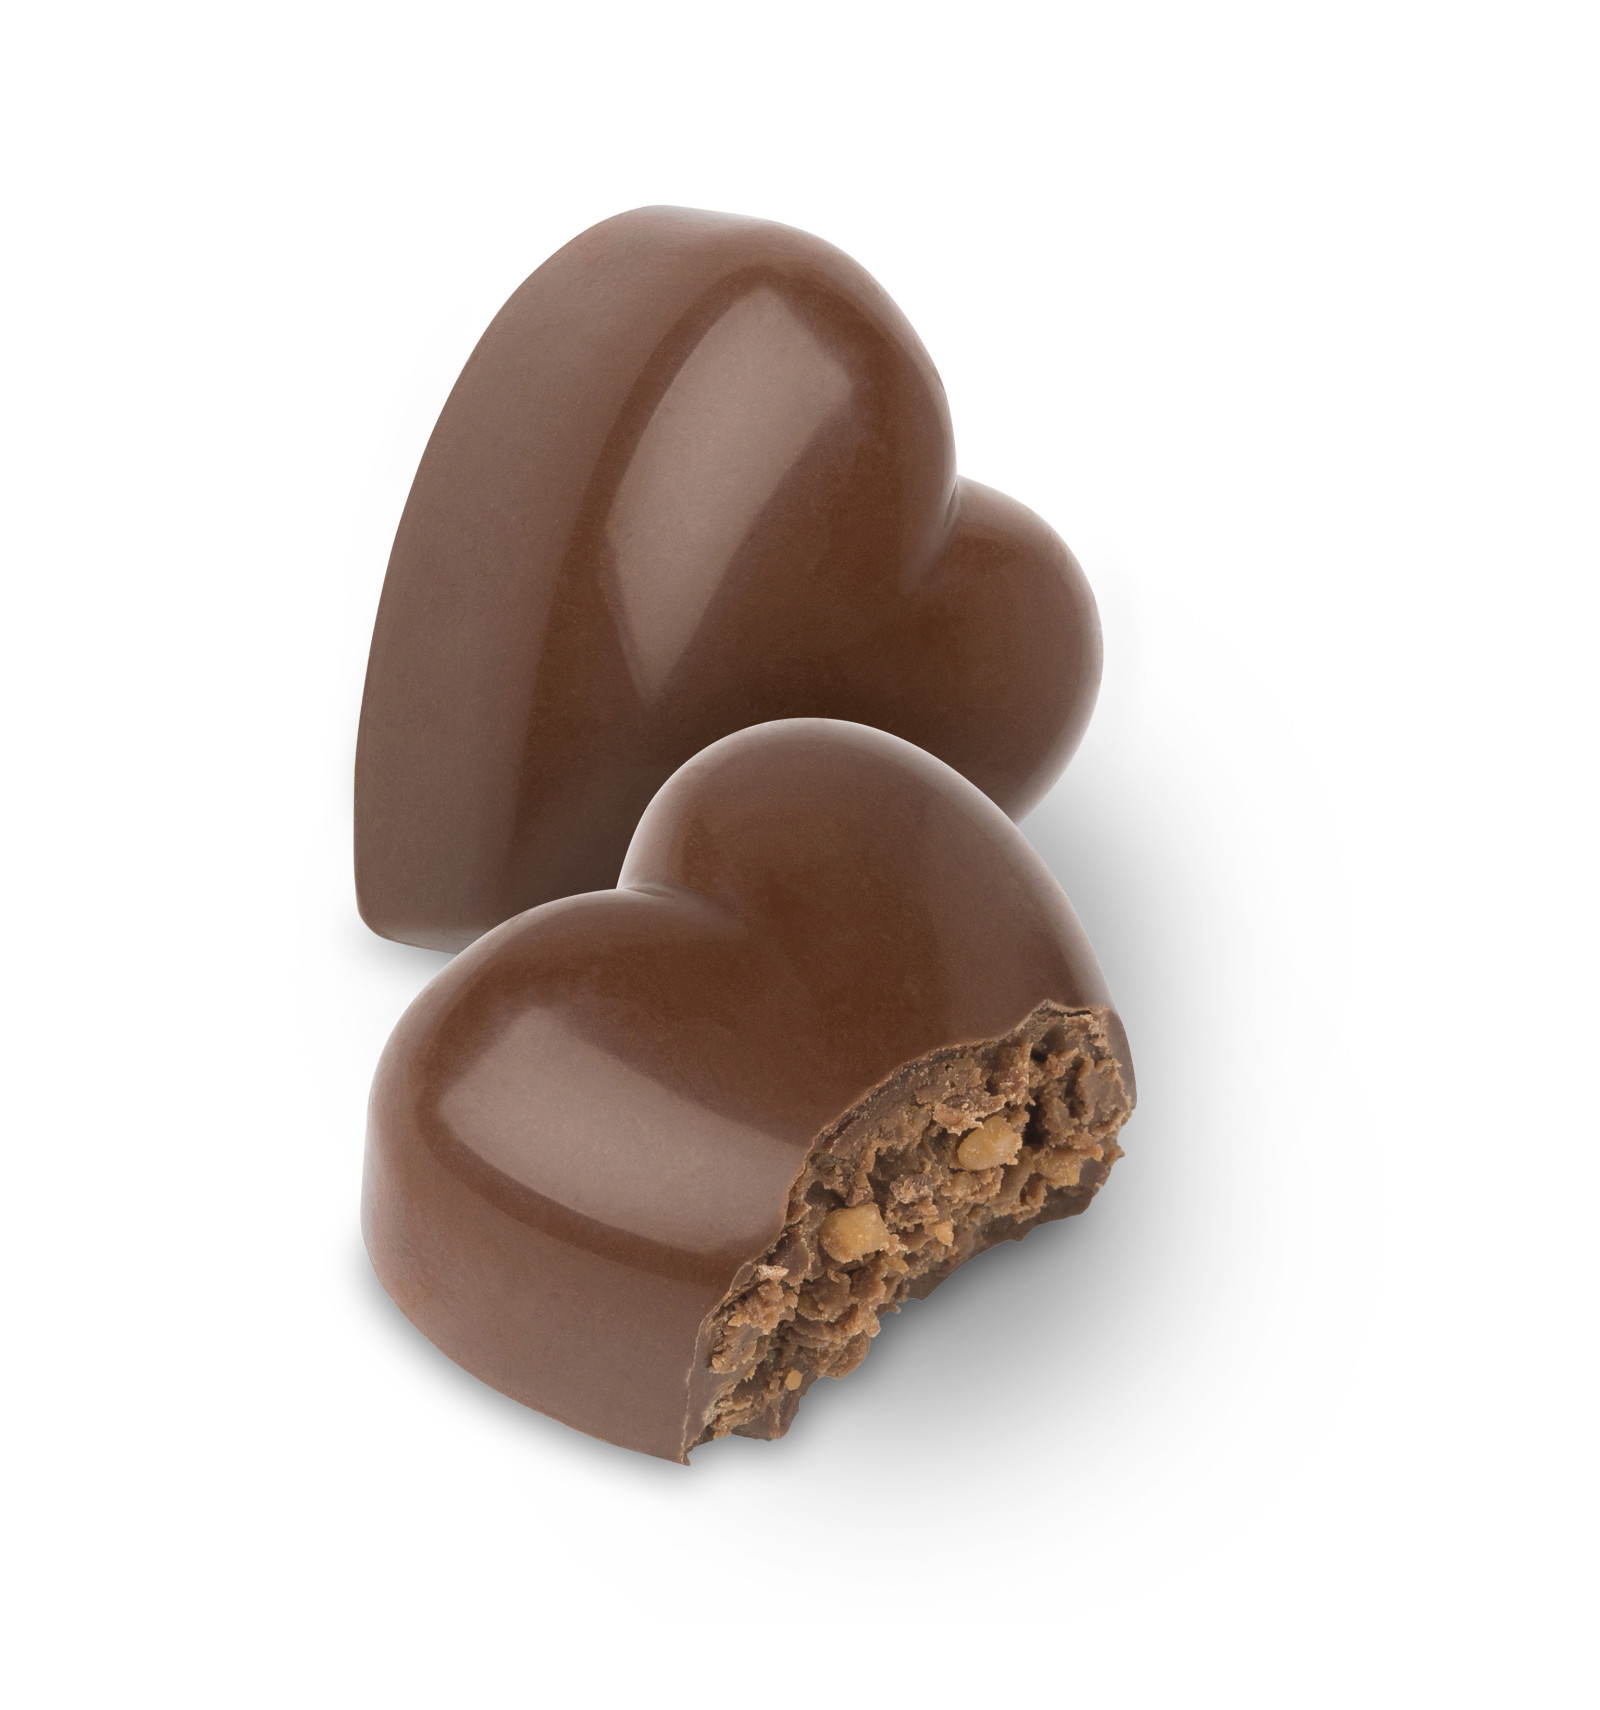 Chocolat Belge - Assortiment de 10 Chocolats Cœur - Cdiscount Au quotidien